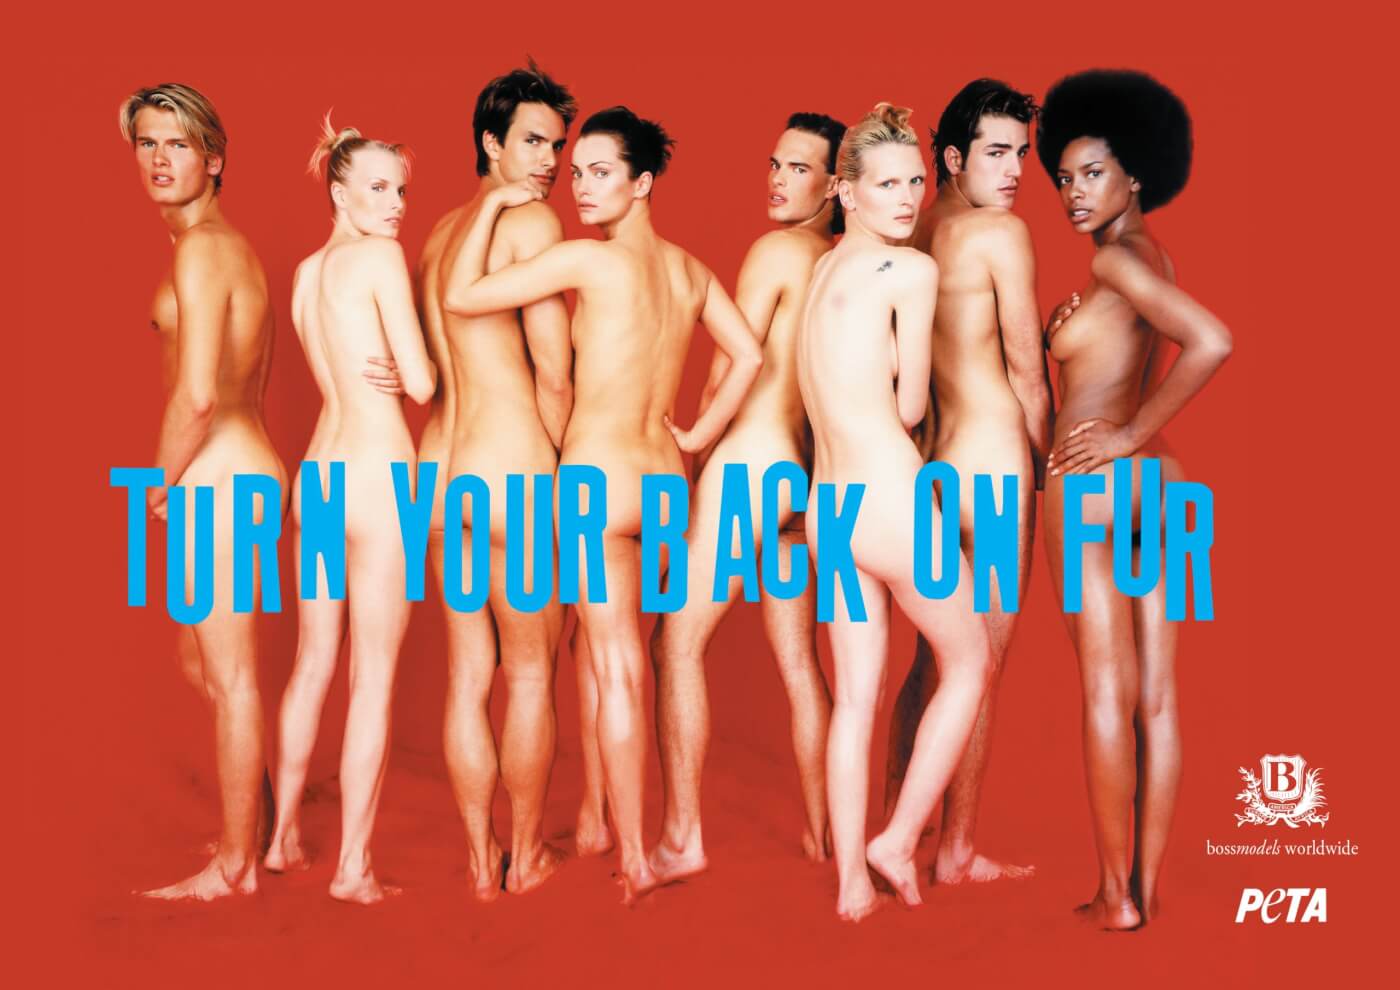 Marcus Schenkenberg, Joel West and Boss Models anti-fur campaign.